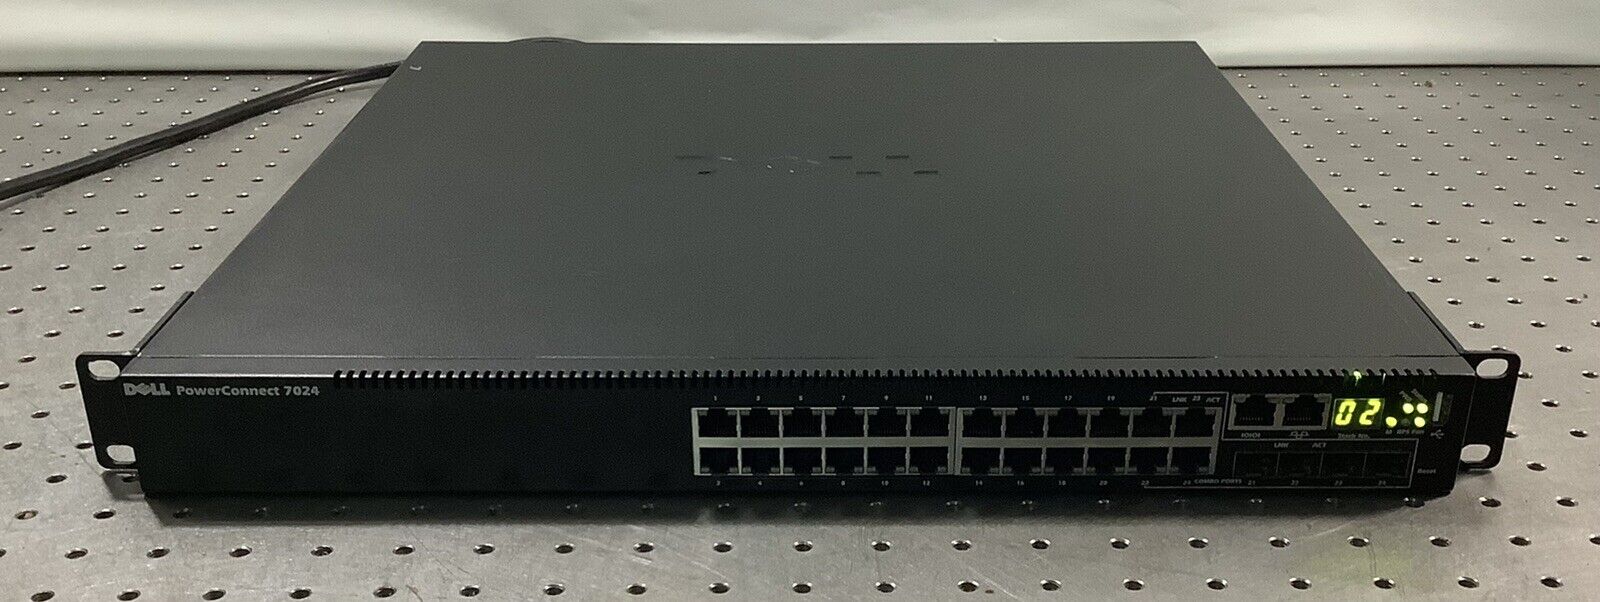 Dell PowerConnect 7024 24-Port Gigabit Rackmount Switch